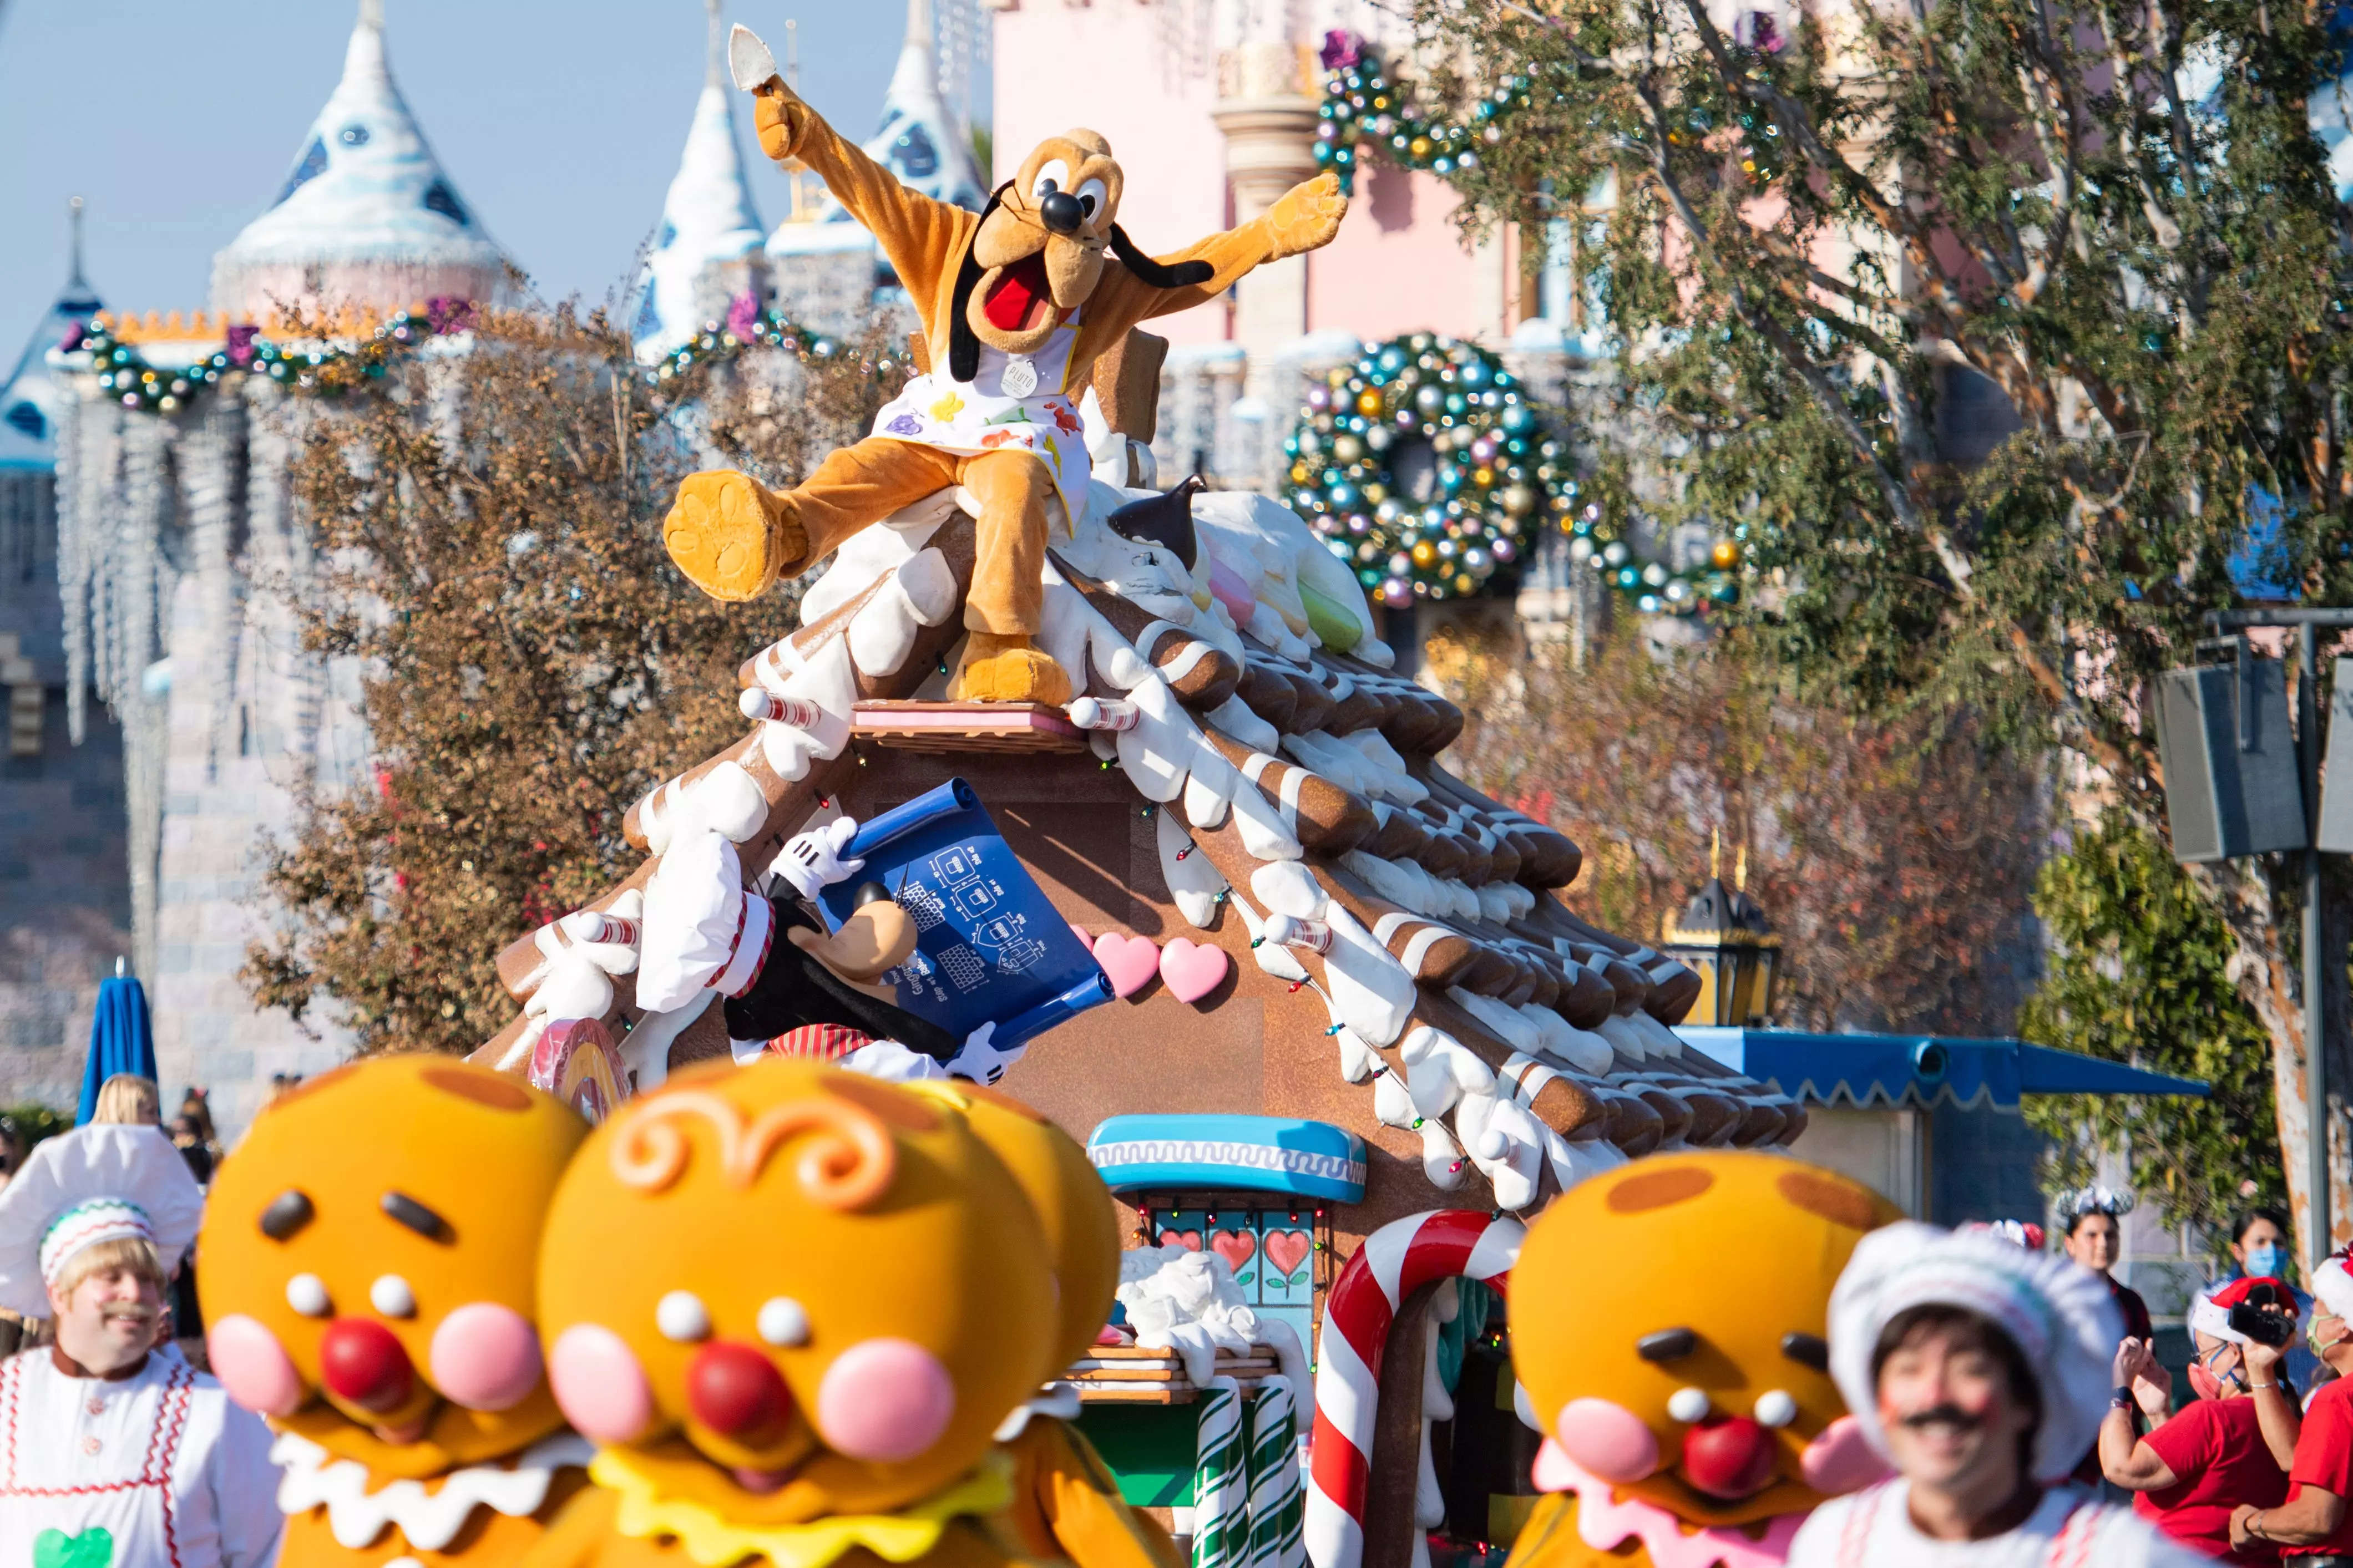 The 2021 Disney Parks Magical Christmas Day Celebration